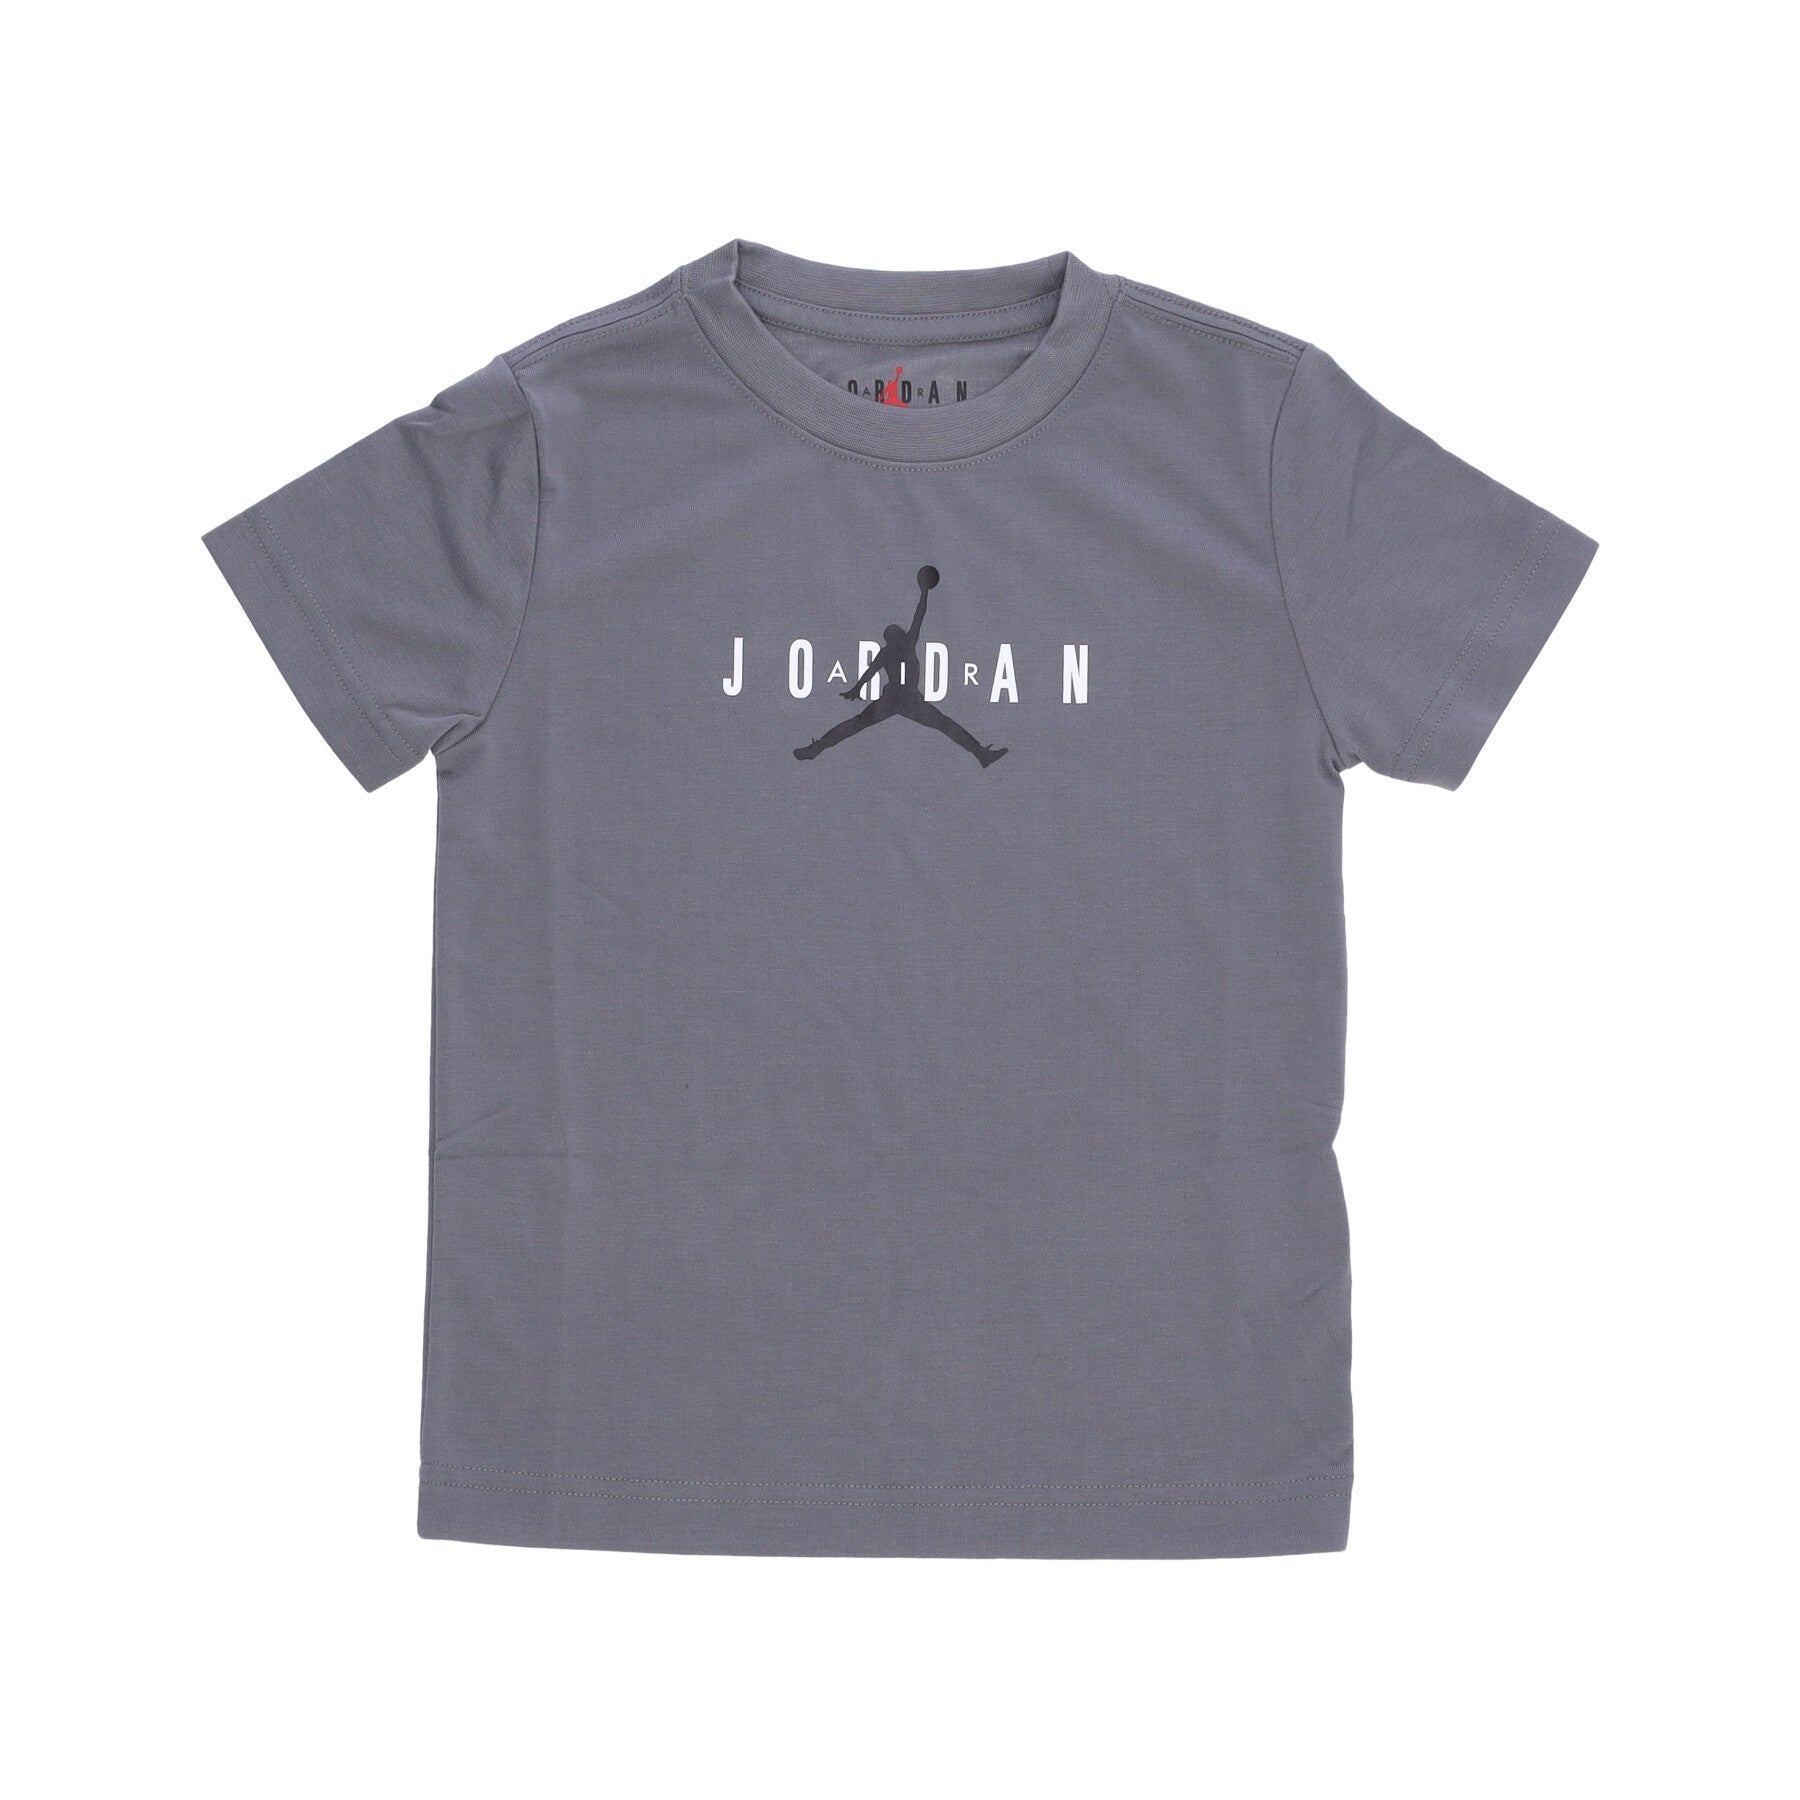 Jordan, Maglietta Bambino Jumpman Sustainable Graphic Tee, Smoke Grey